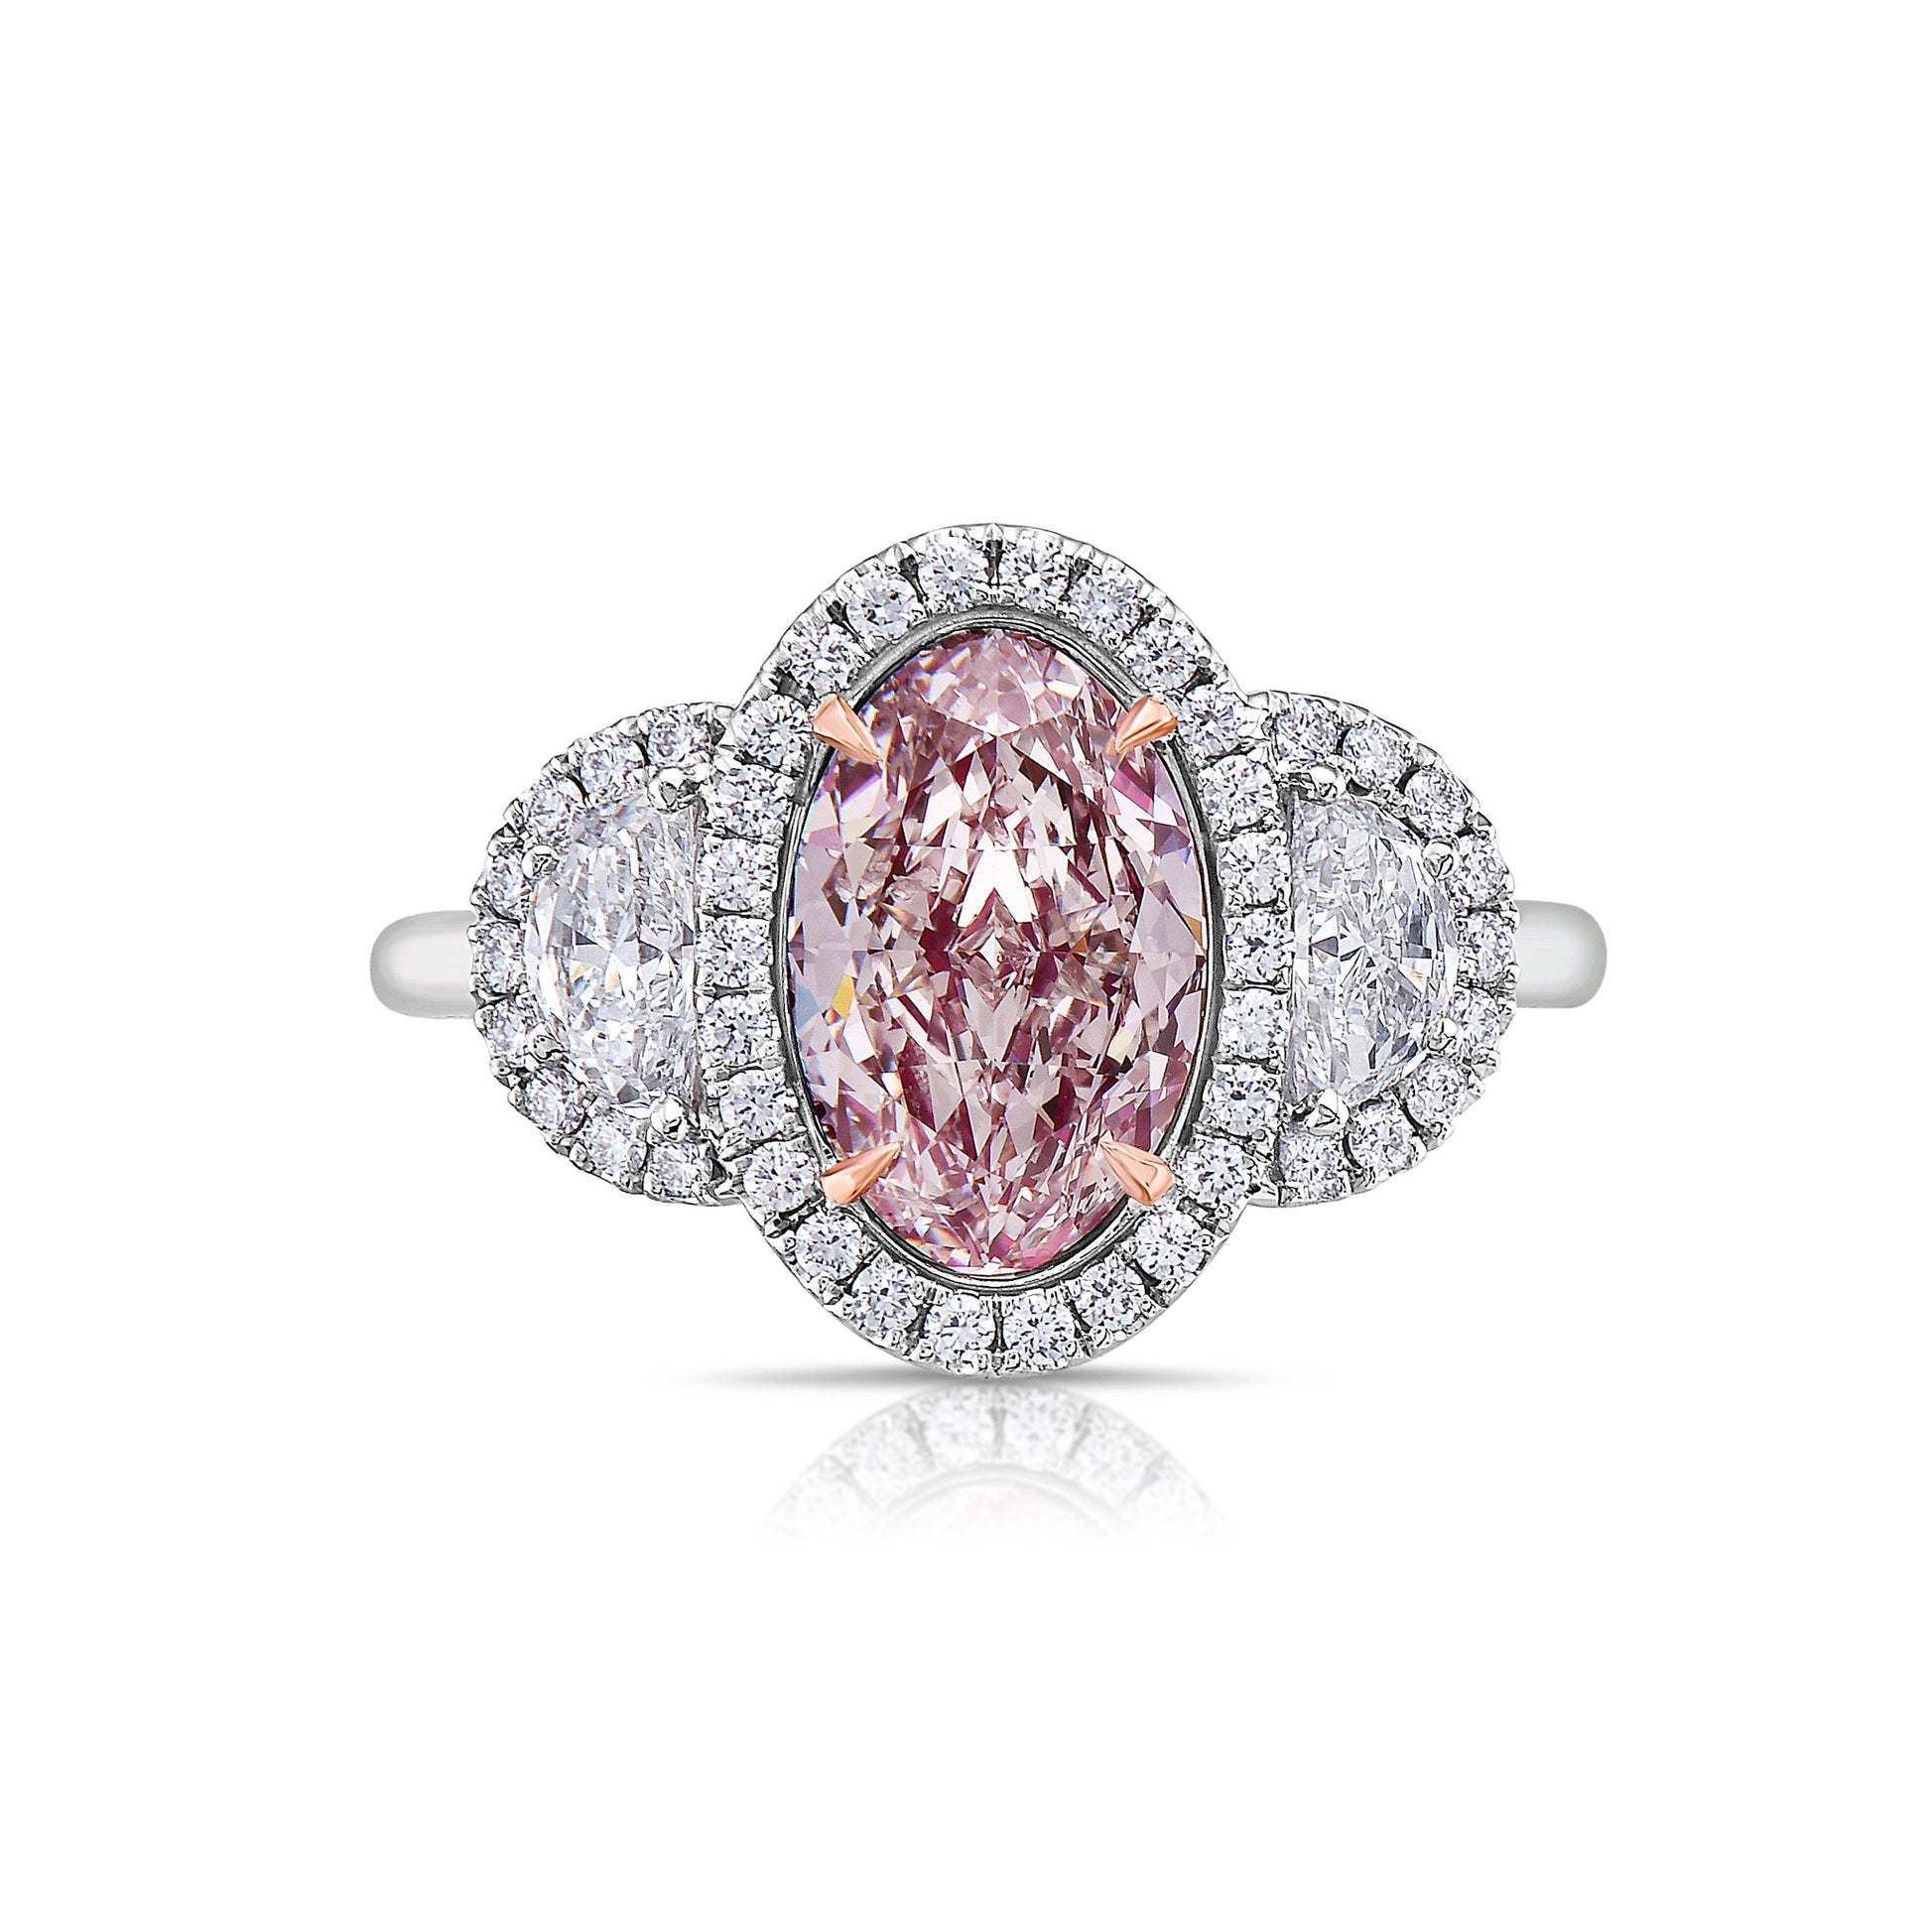 2 carat pink diamond oval. Light pink diamond oval. Natural pink diamond oval. Gia certified pink diamond. Light pink diamond oval ring. Pink diamond engagement ring.